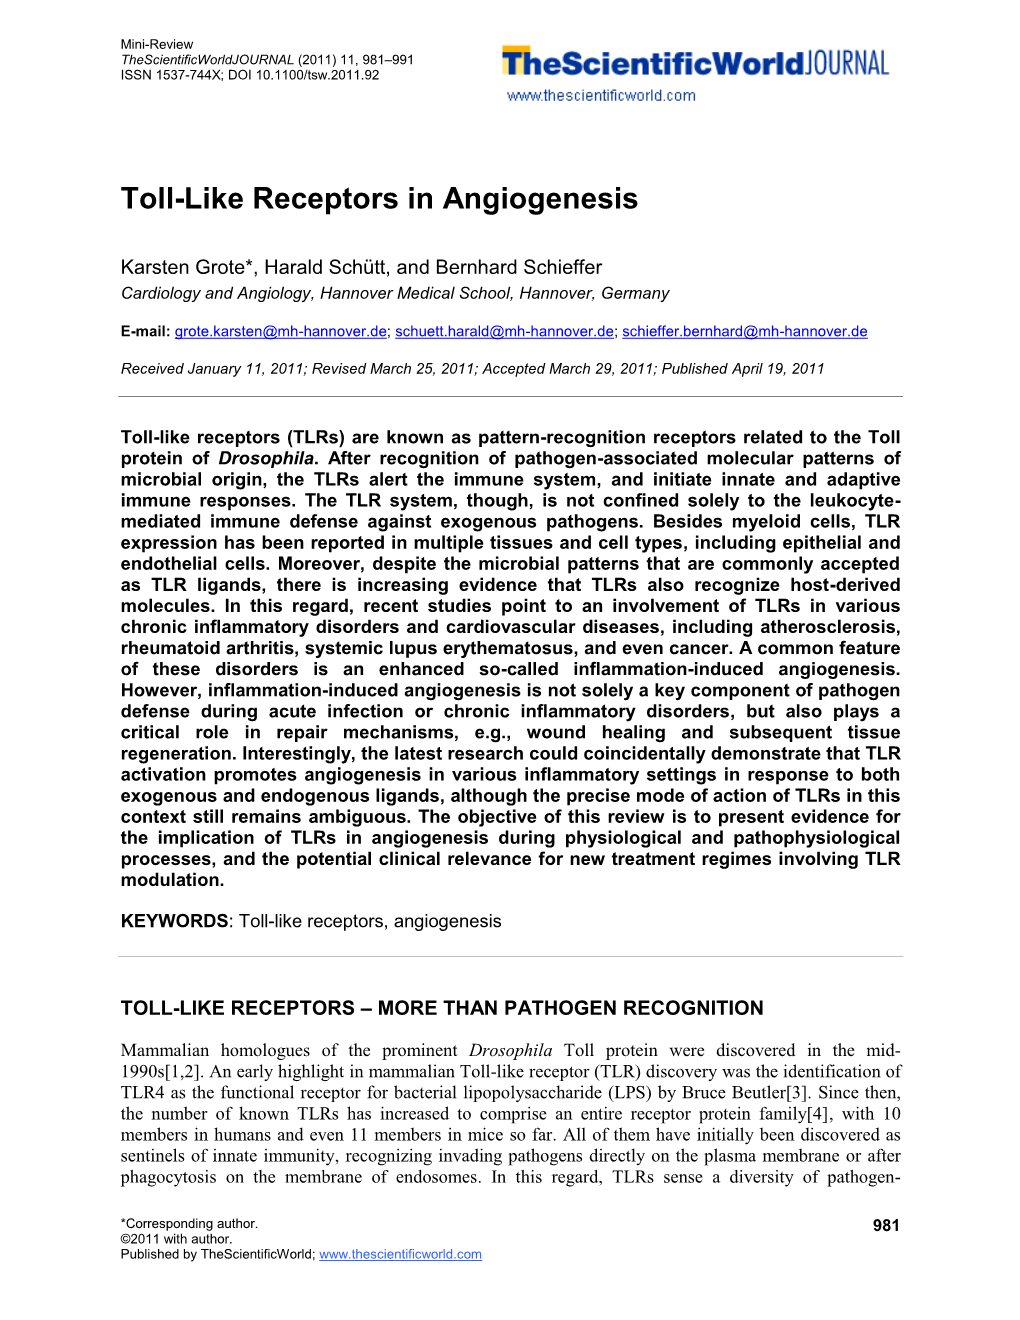 Toll-Like Receptors in Angiogenesis